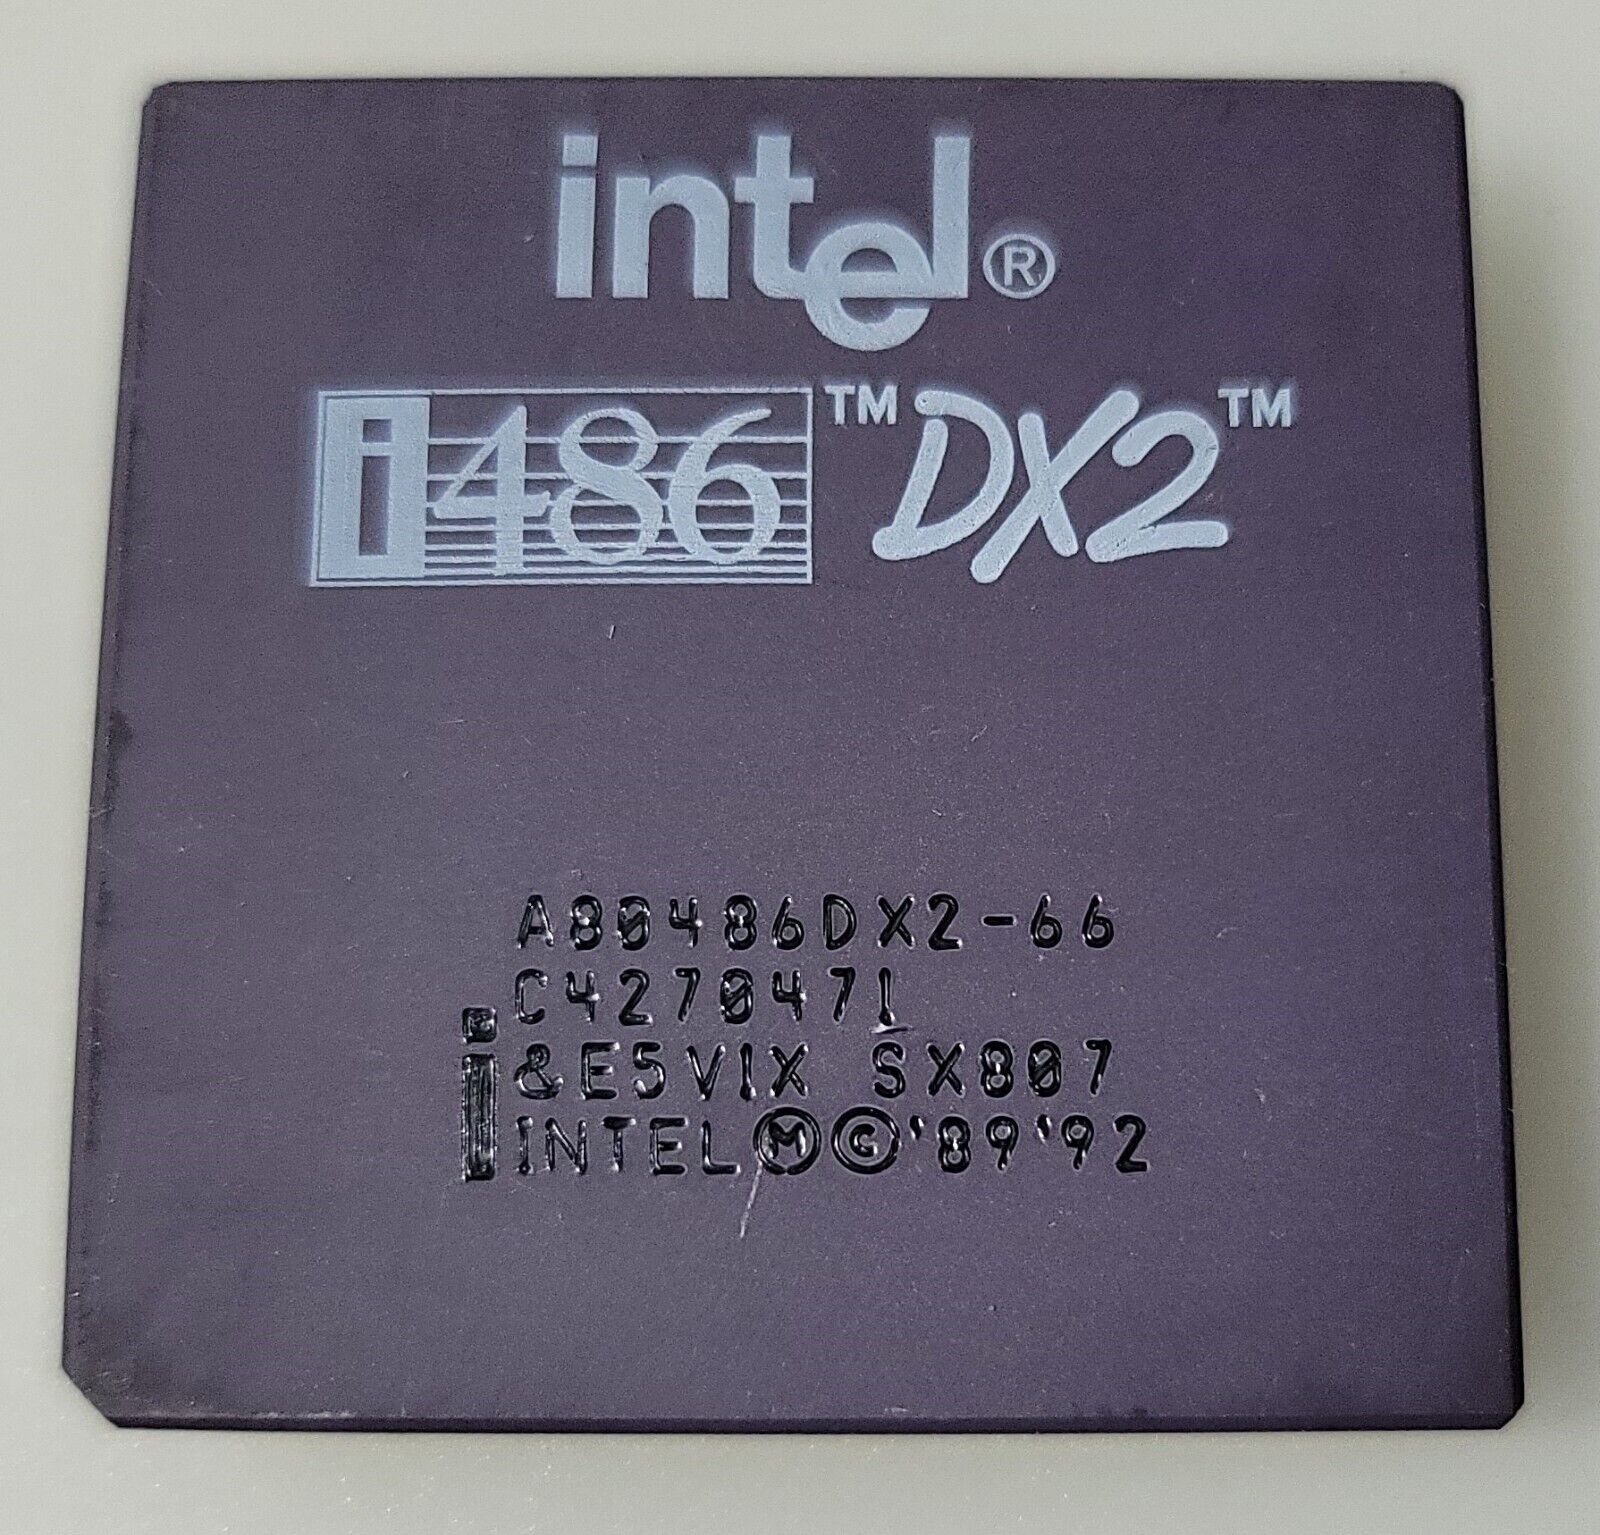 Vintage Rare Intel i486 DX2 A80486DX2-66 SX807 Processor Collection/Gold